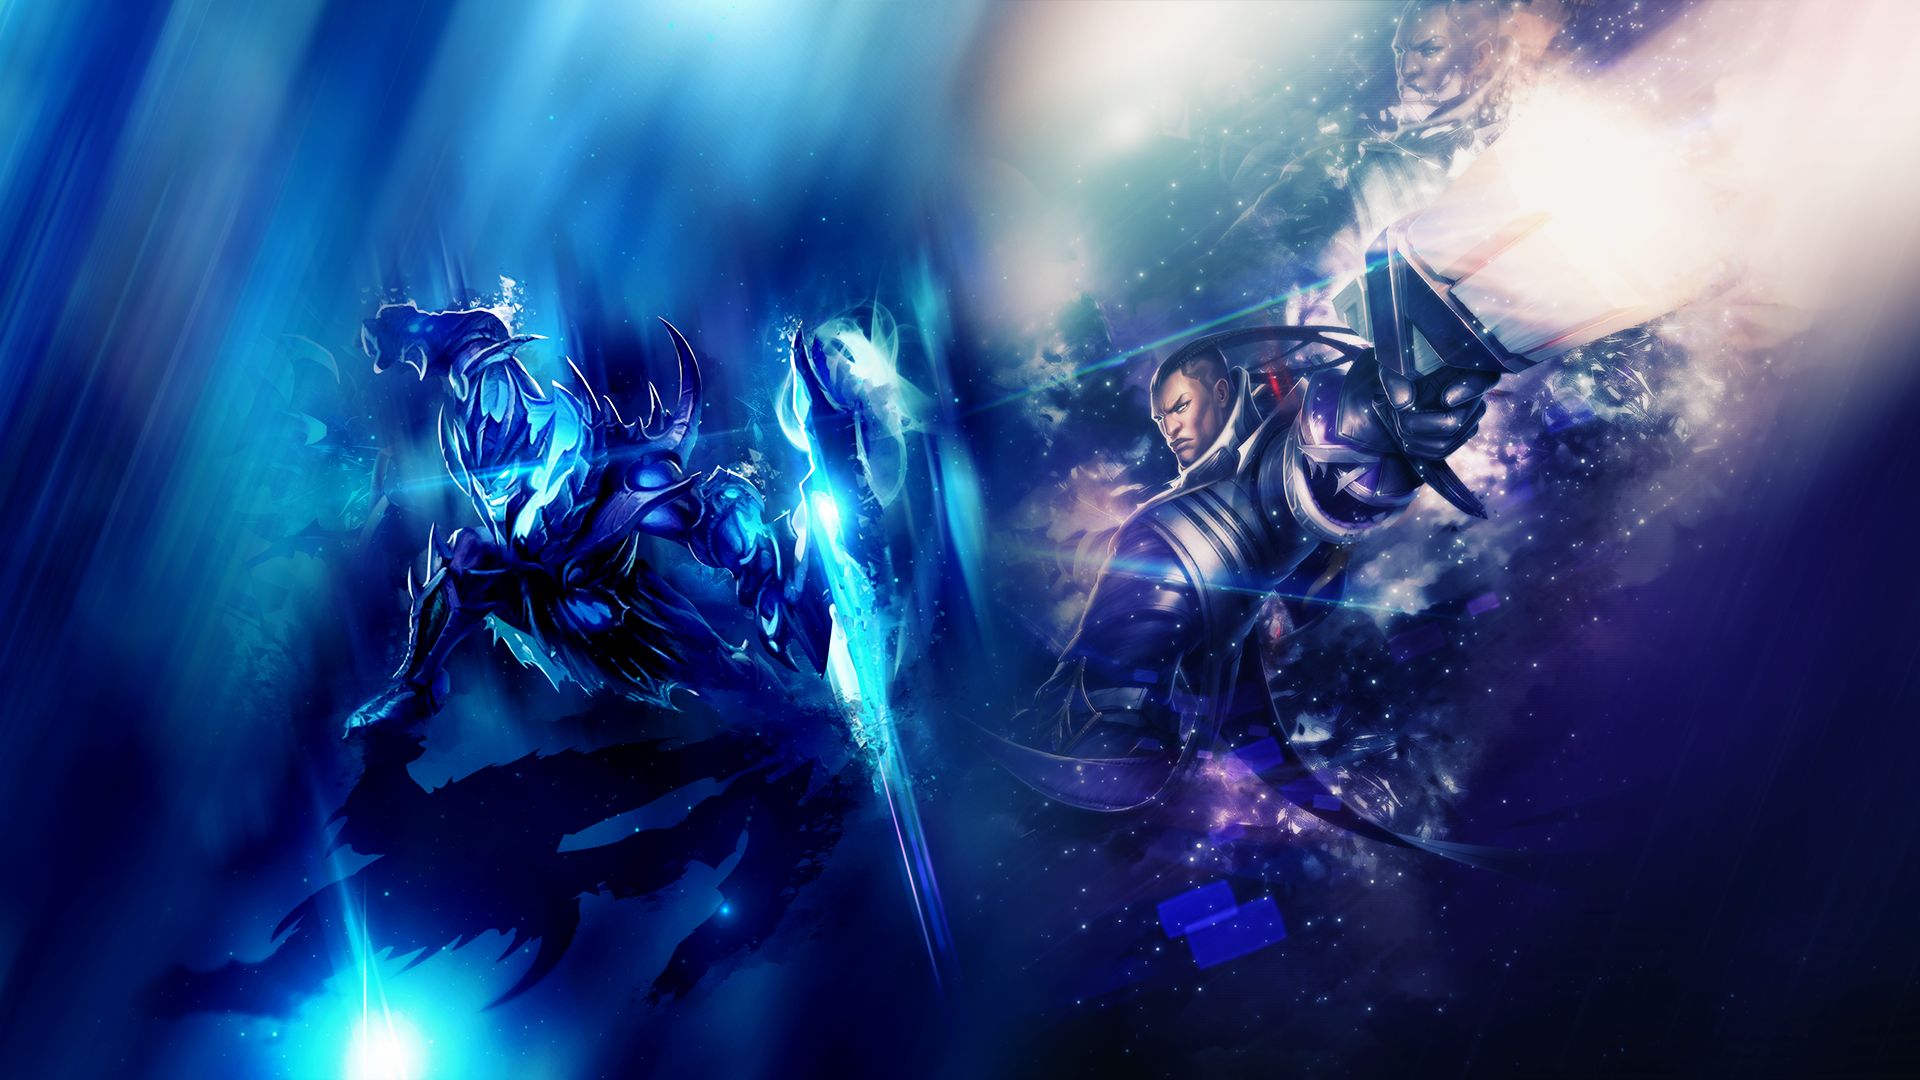 Download Lucian (League Of Legends) wallpaper for mobile phone, free Lucian (League Of Legends) HD picture